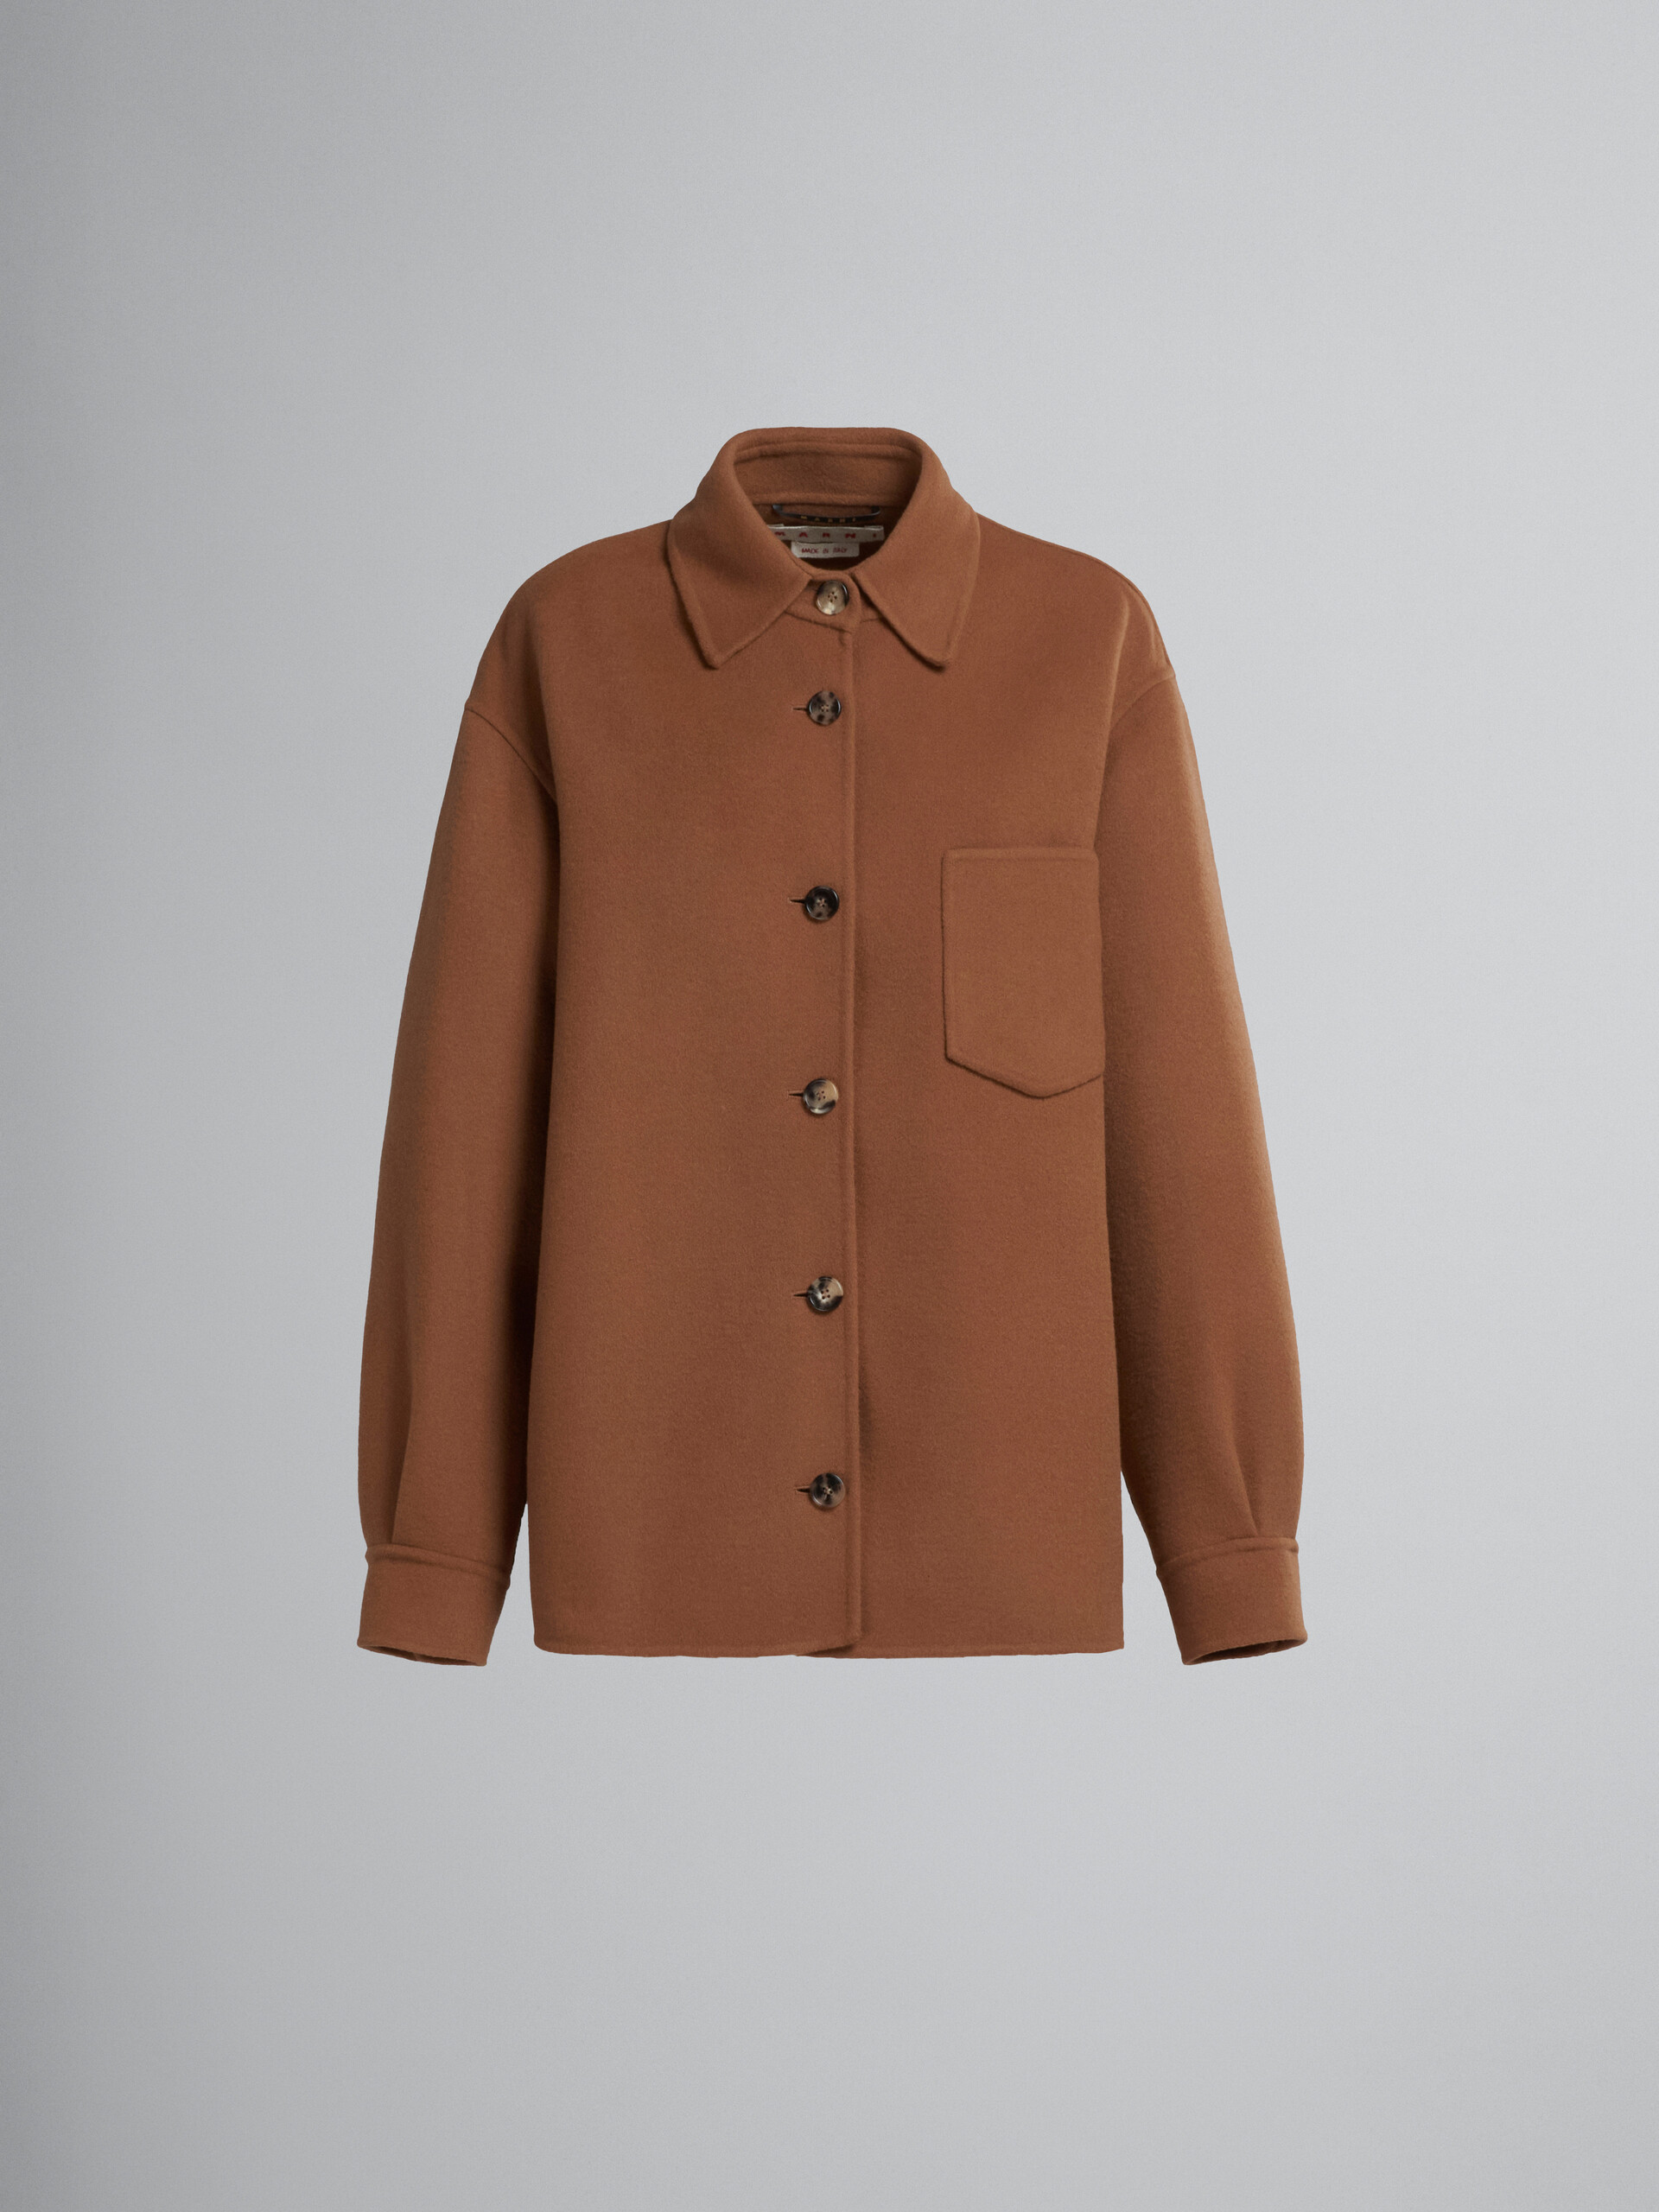 Long brown wool overshirt - Jackets - Image 1